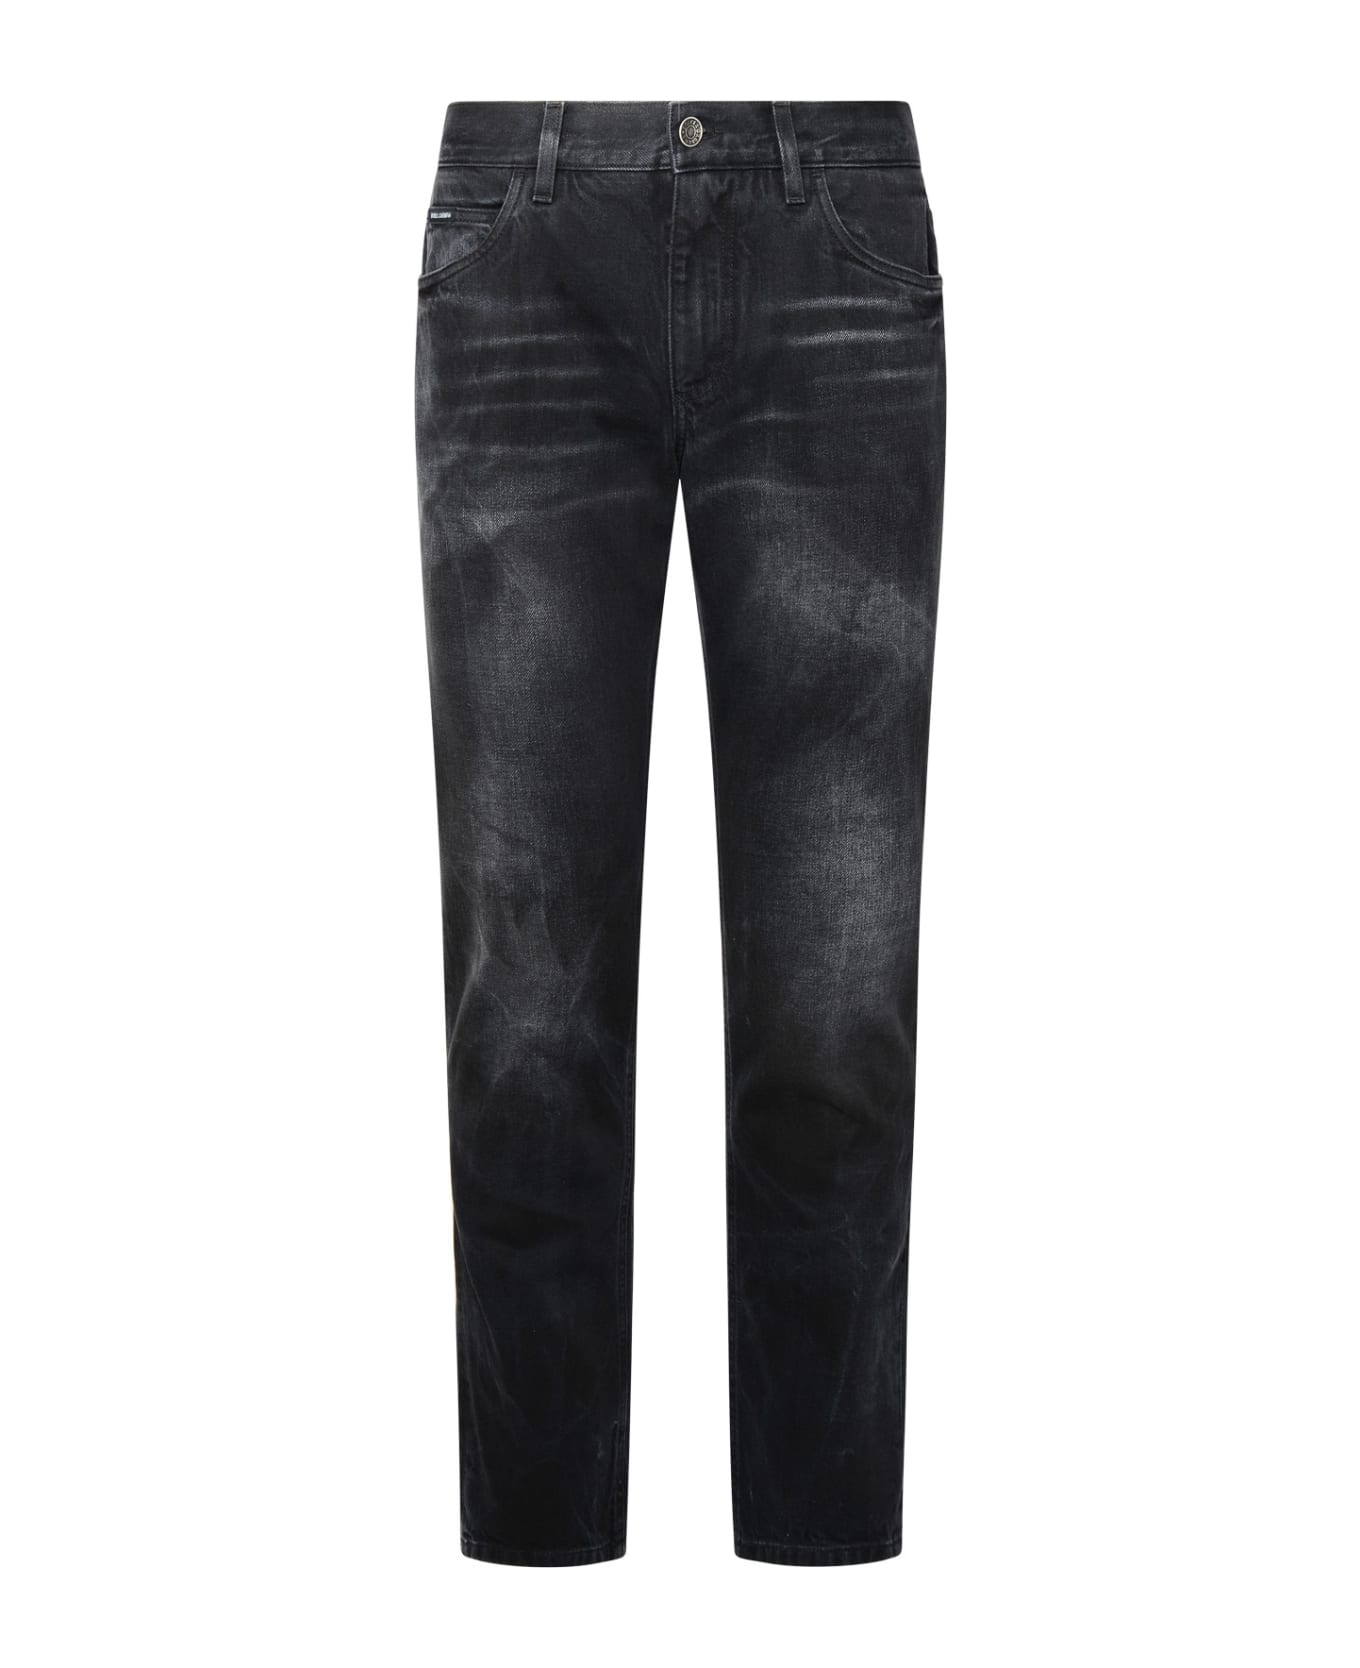 Dolce & Gabbana Black Cotton Jeans - Black デニム